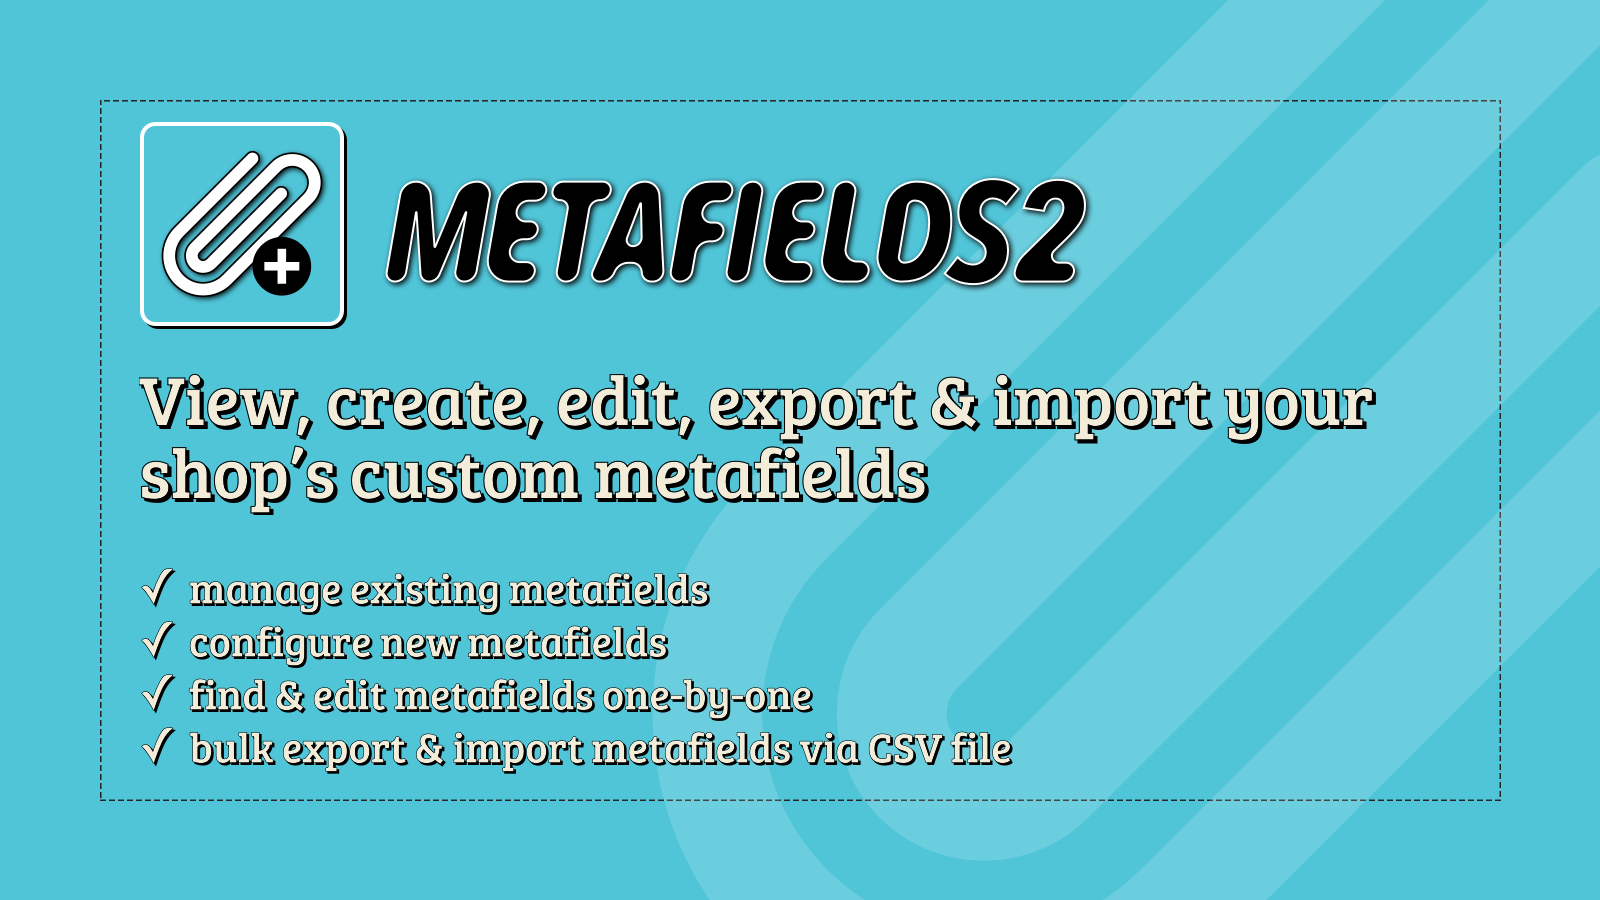 Metafields2 - Erstellen, bearbeiten, exportieren/importieren Sie Ihre benutzerdefinierten Metafelder